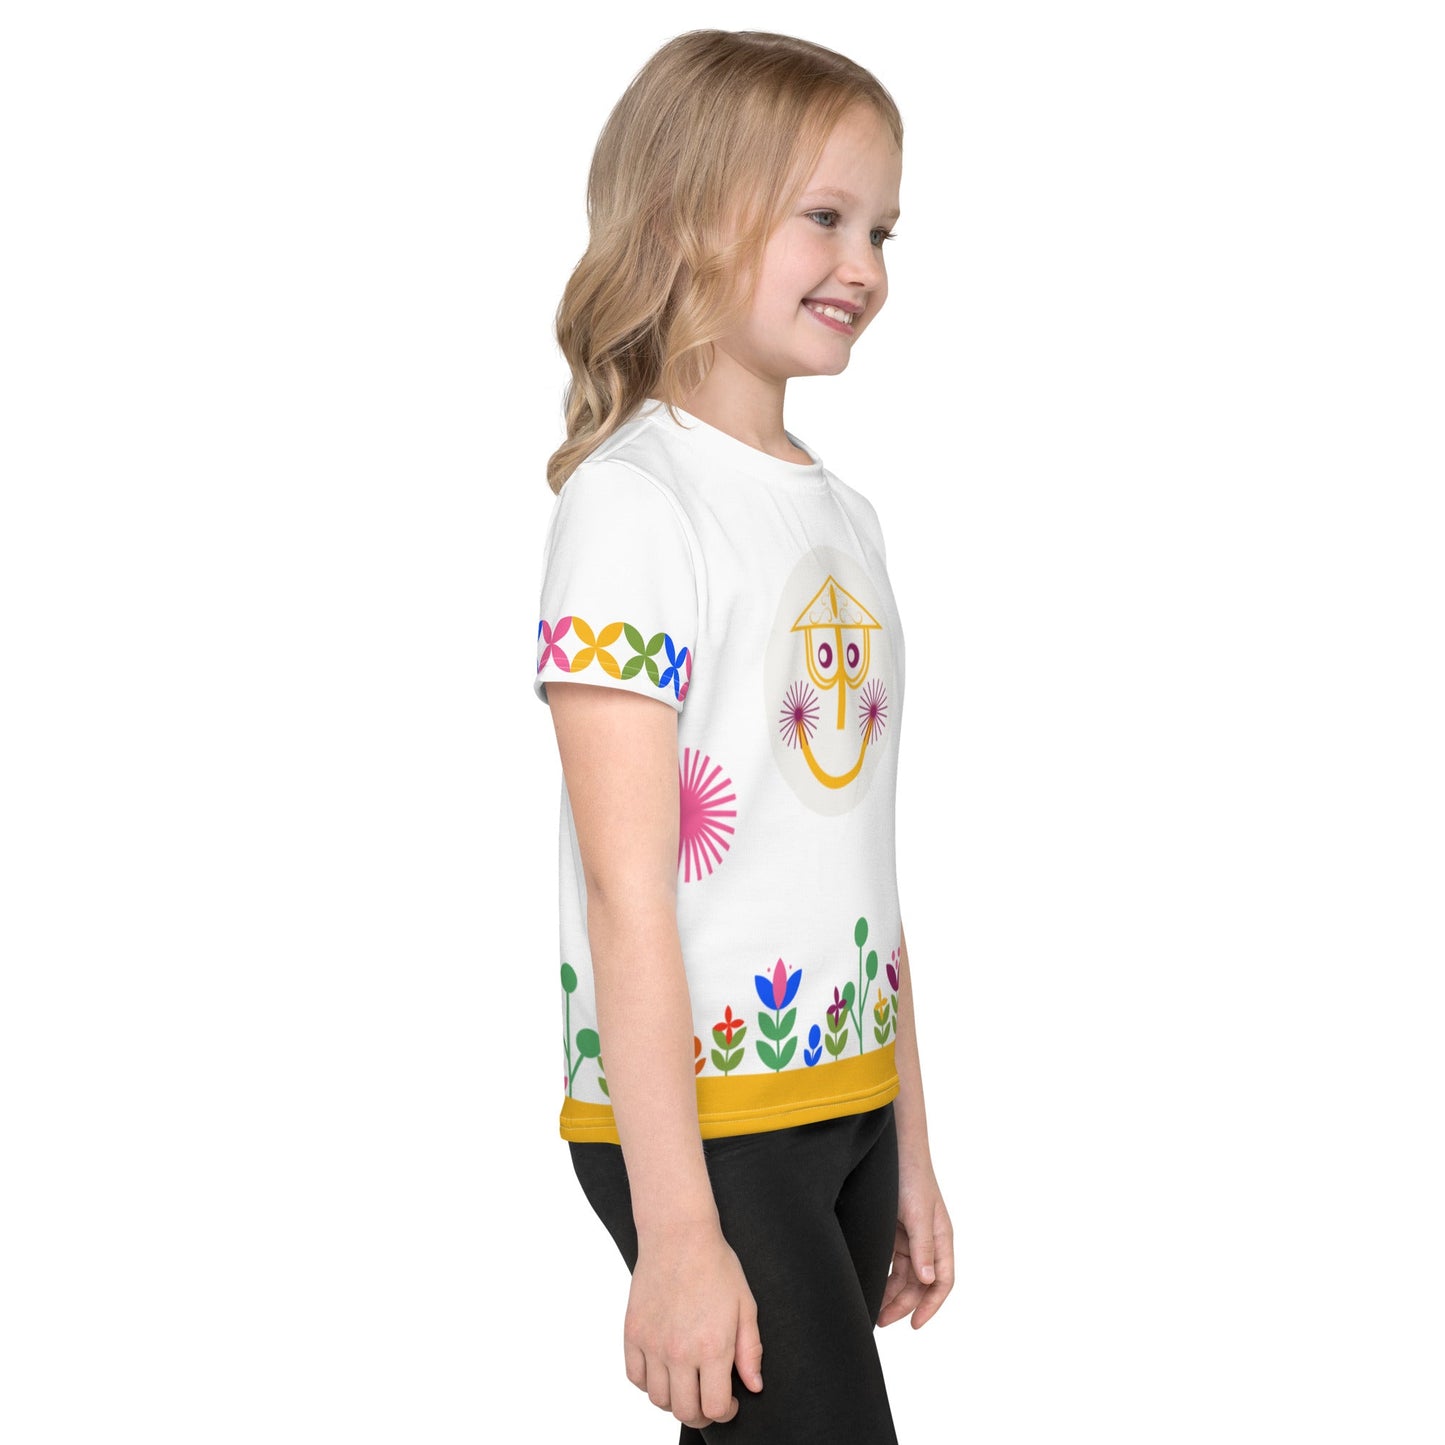 Small World Kids crew neck t-shirt disney kidsdisney styledisney trip#tag4##tag5##tag6#